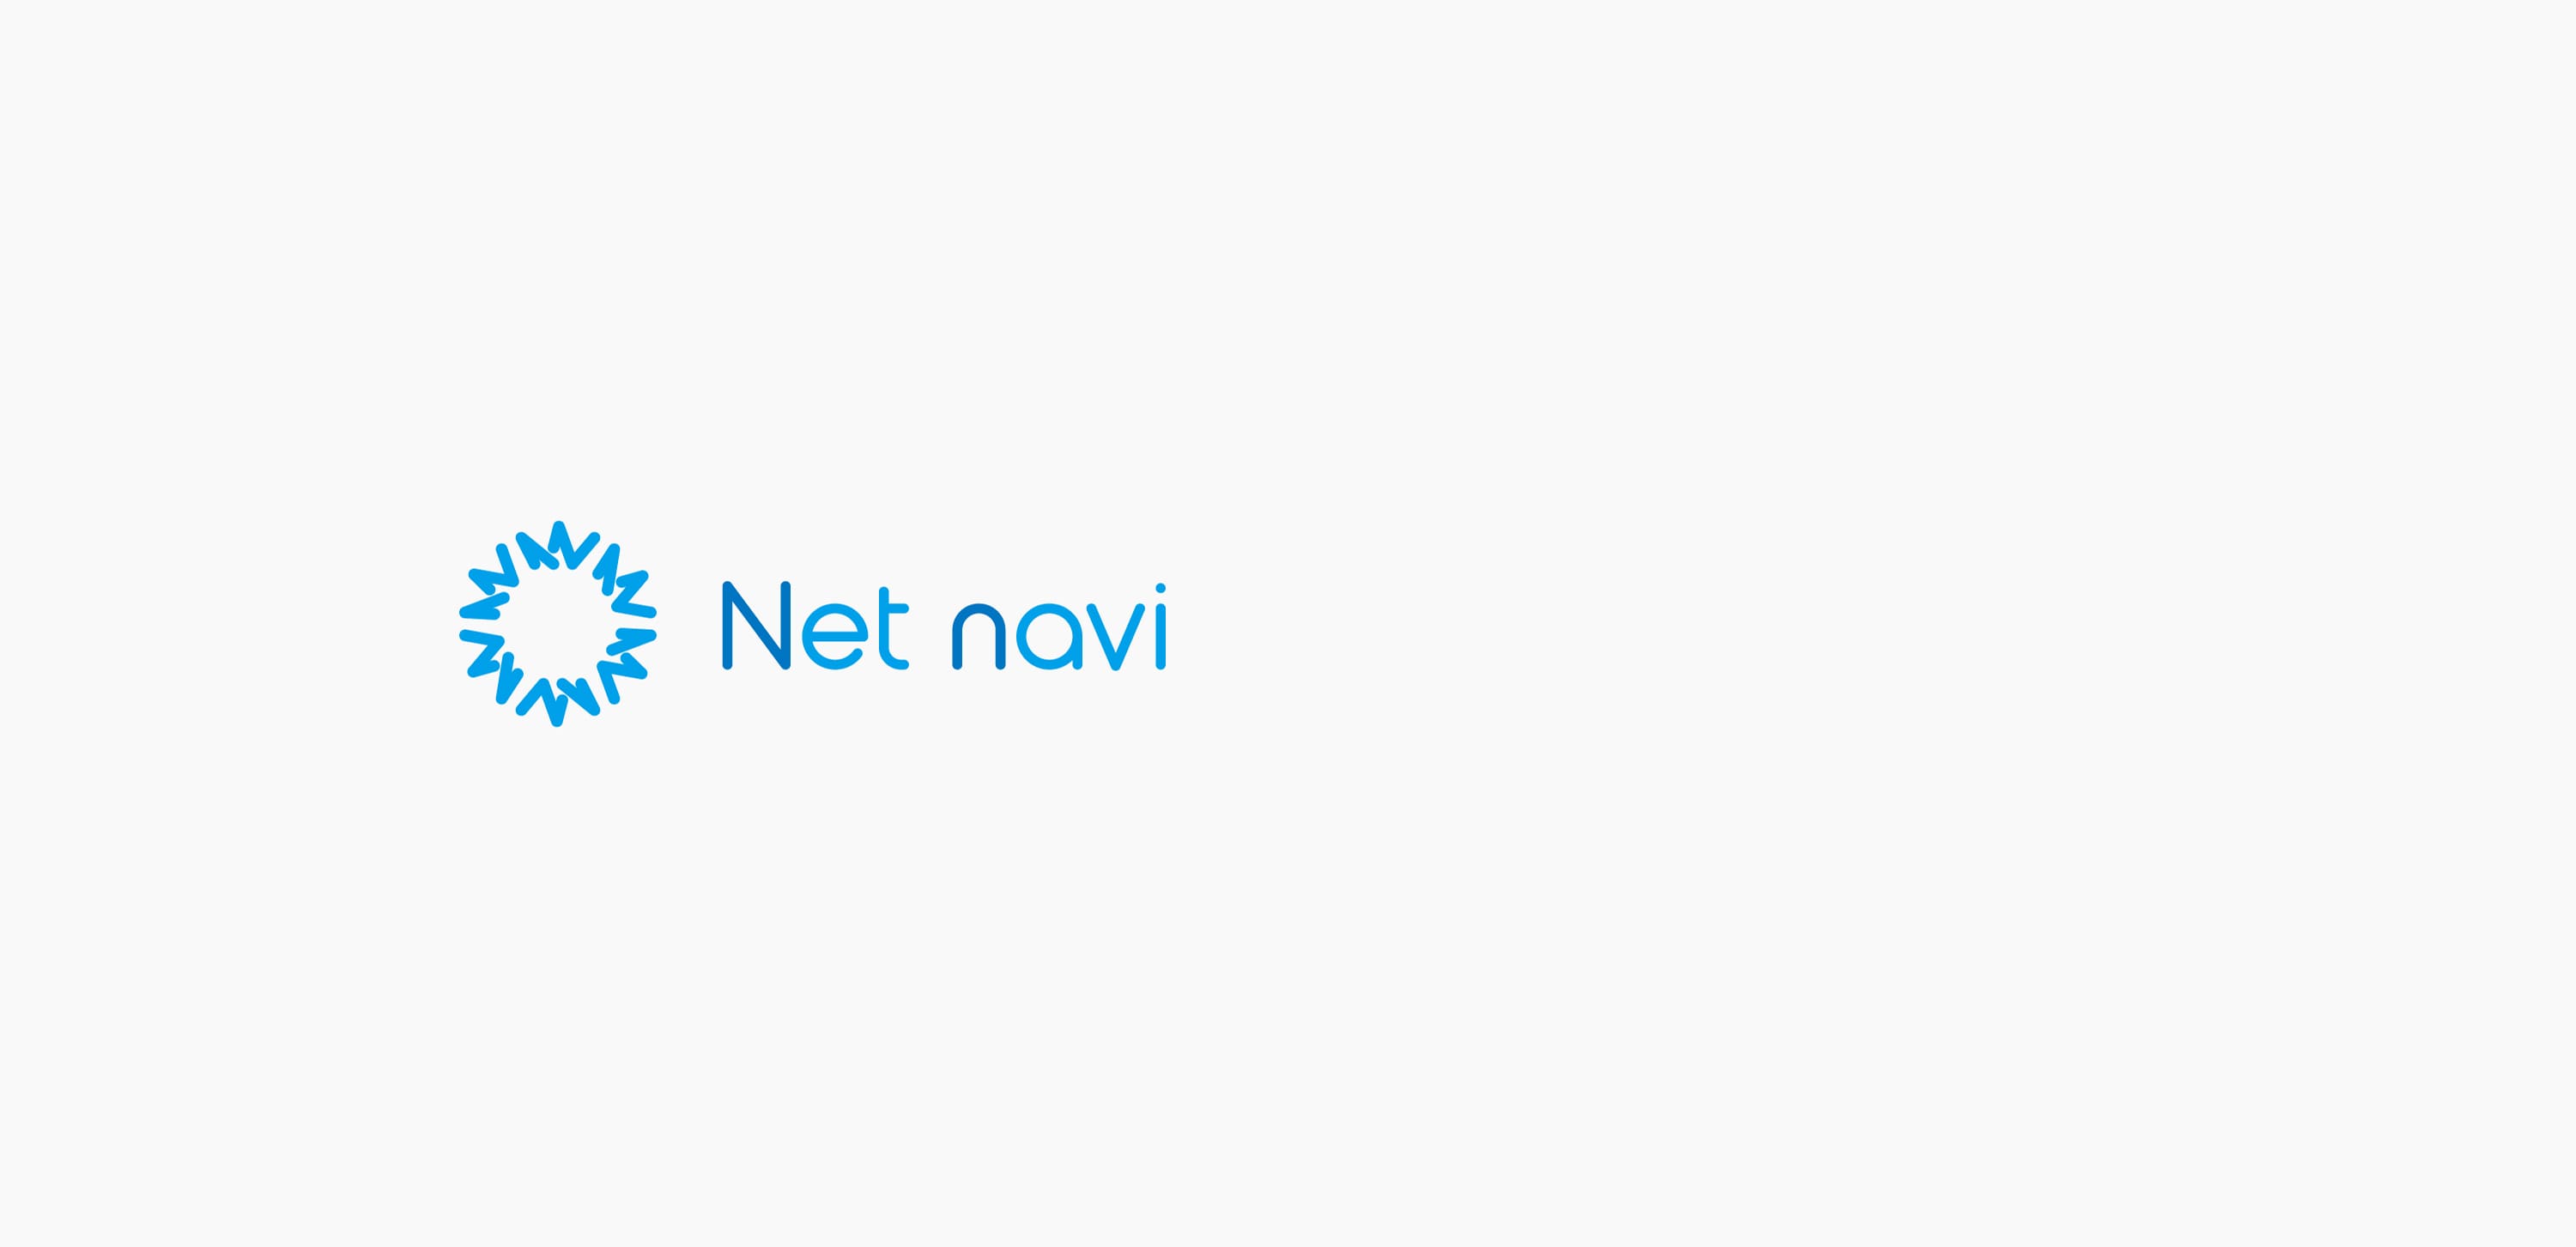 Net navi / Net navi communications